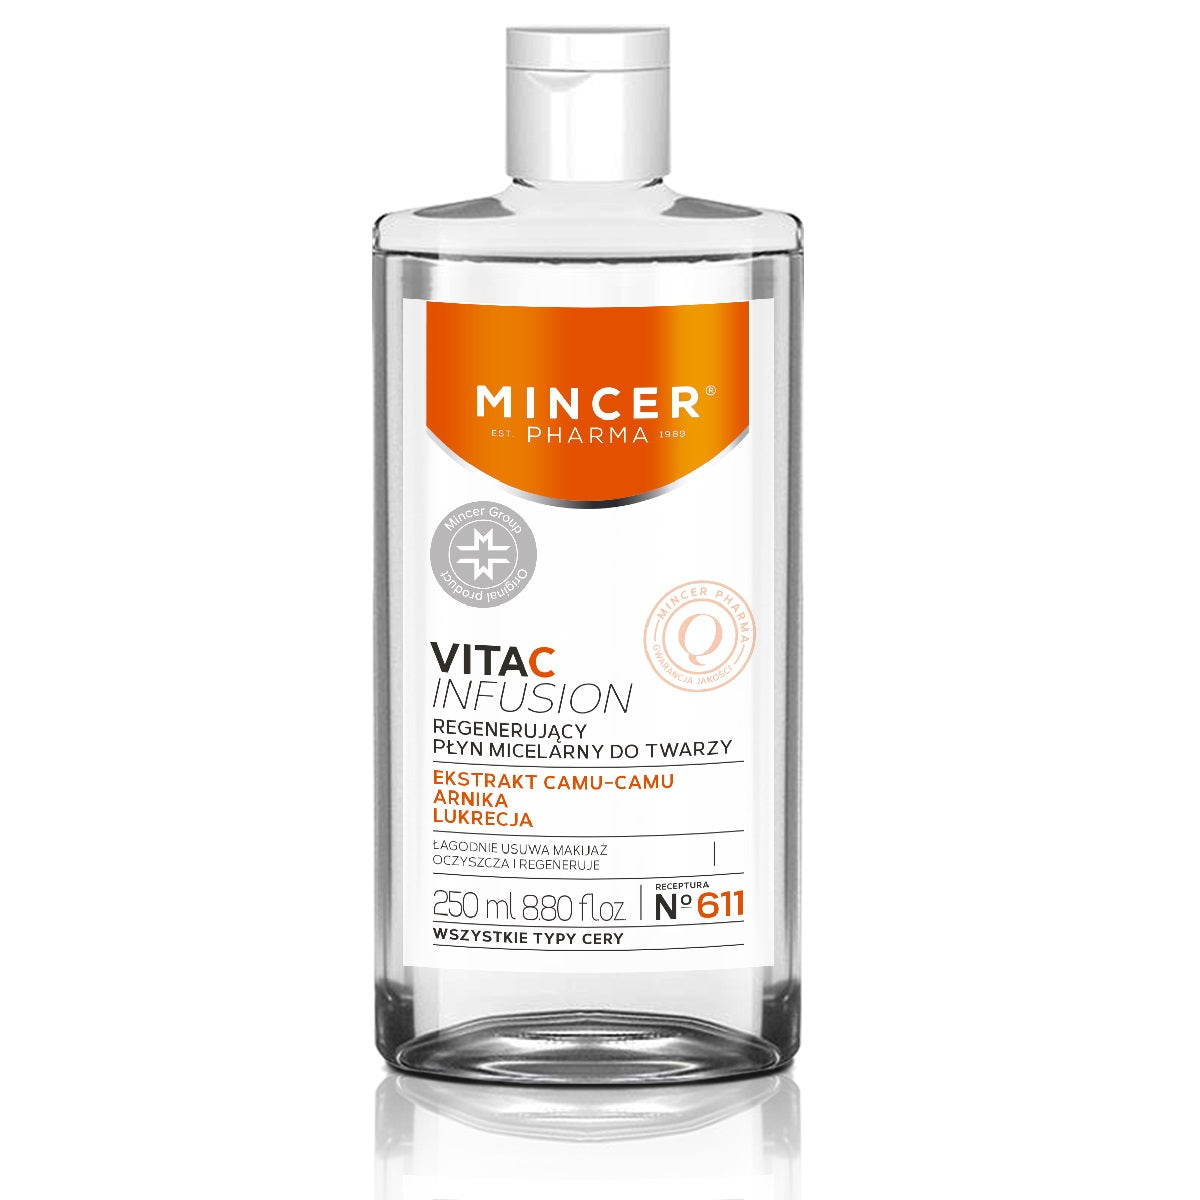 Mincer Pharma Регенерирующая мицеллярная вода для лица Vita C Infusion №611 250мл